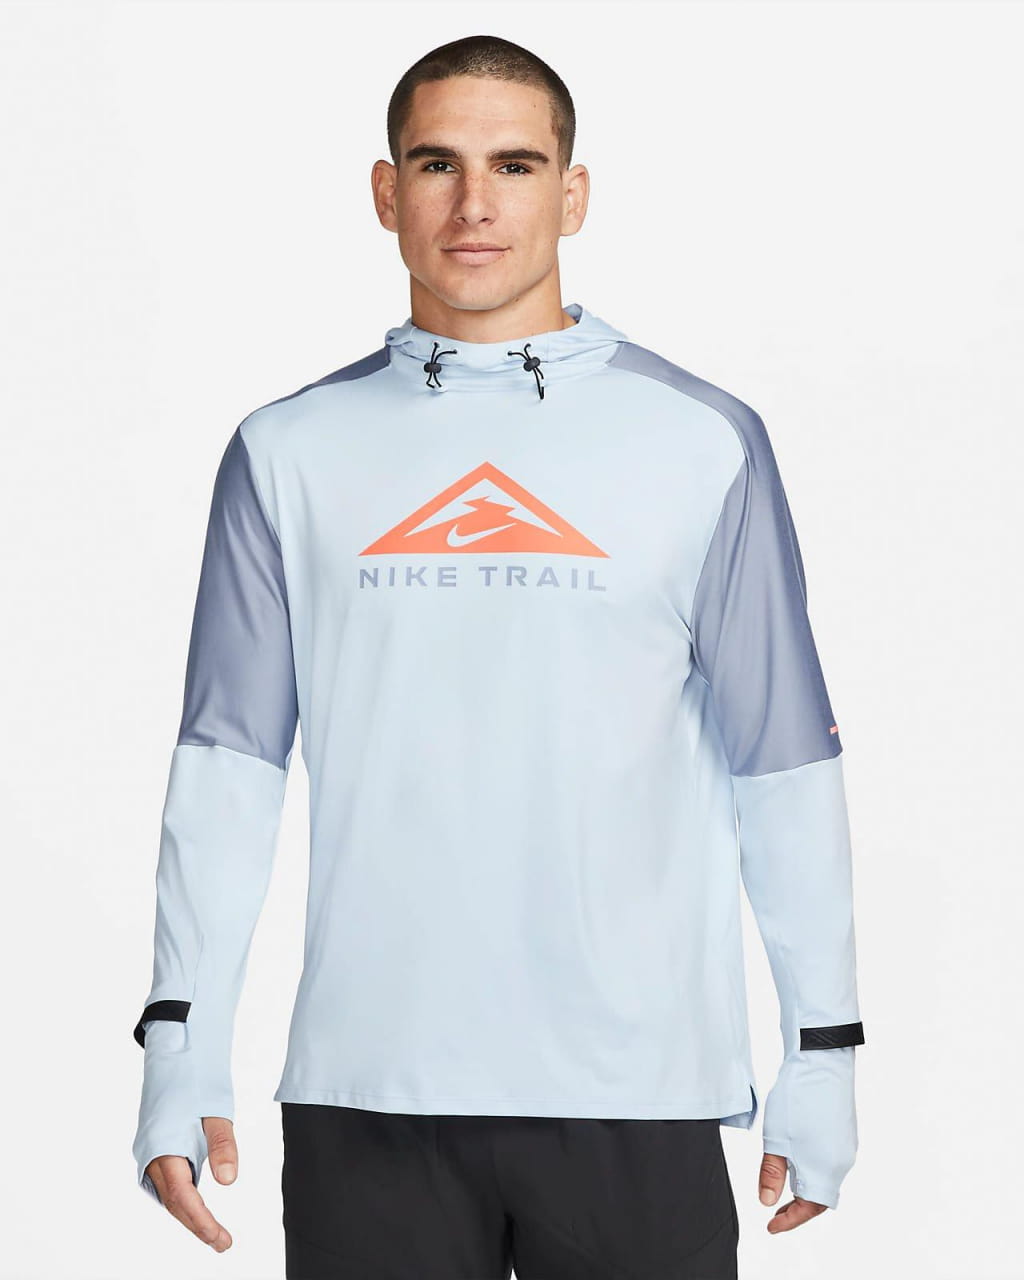 Herren-Laufsweatshirt Nike Dri-FIT Trail Hoodie